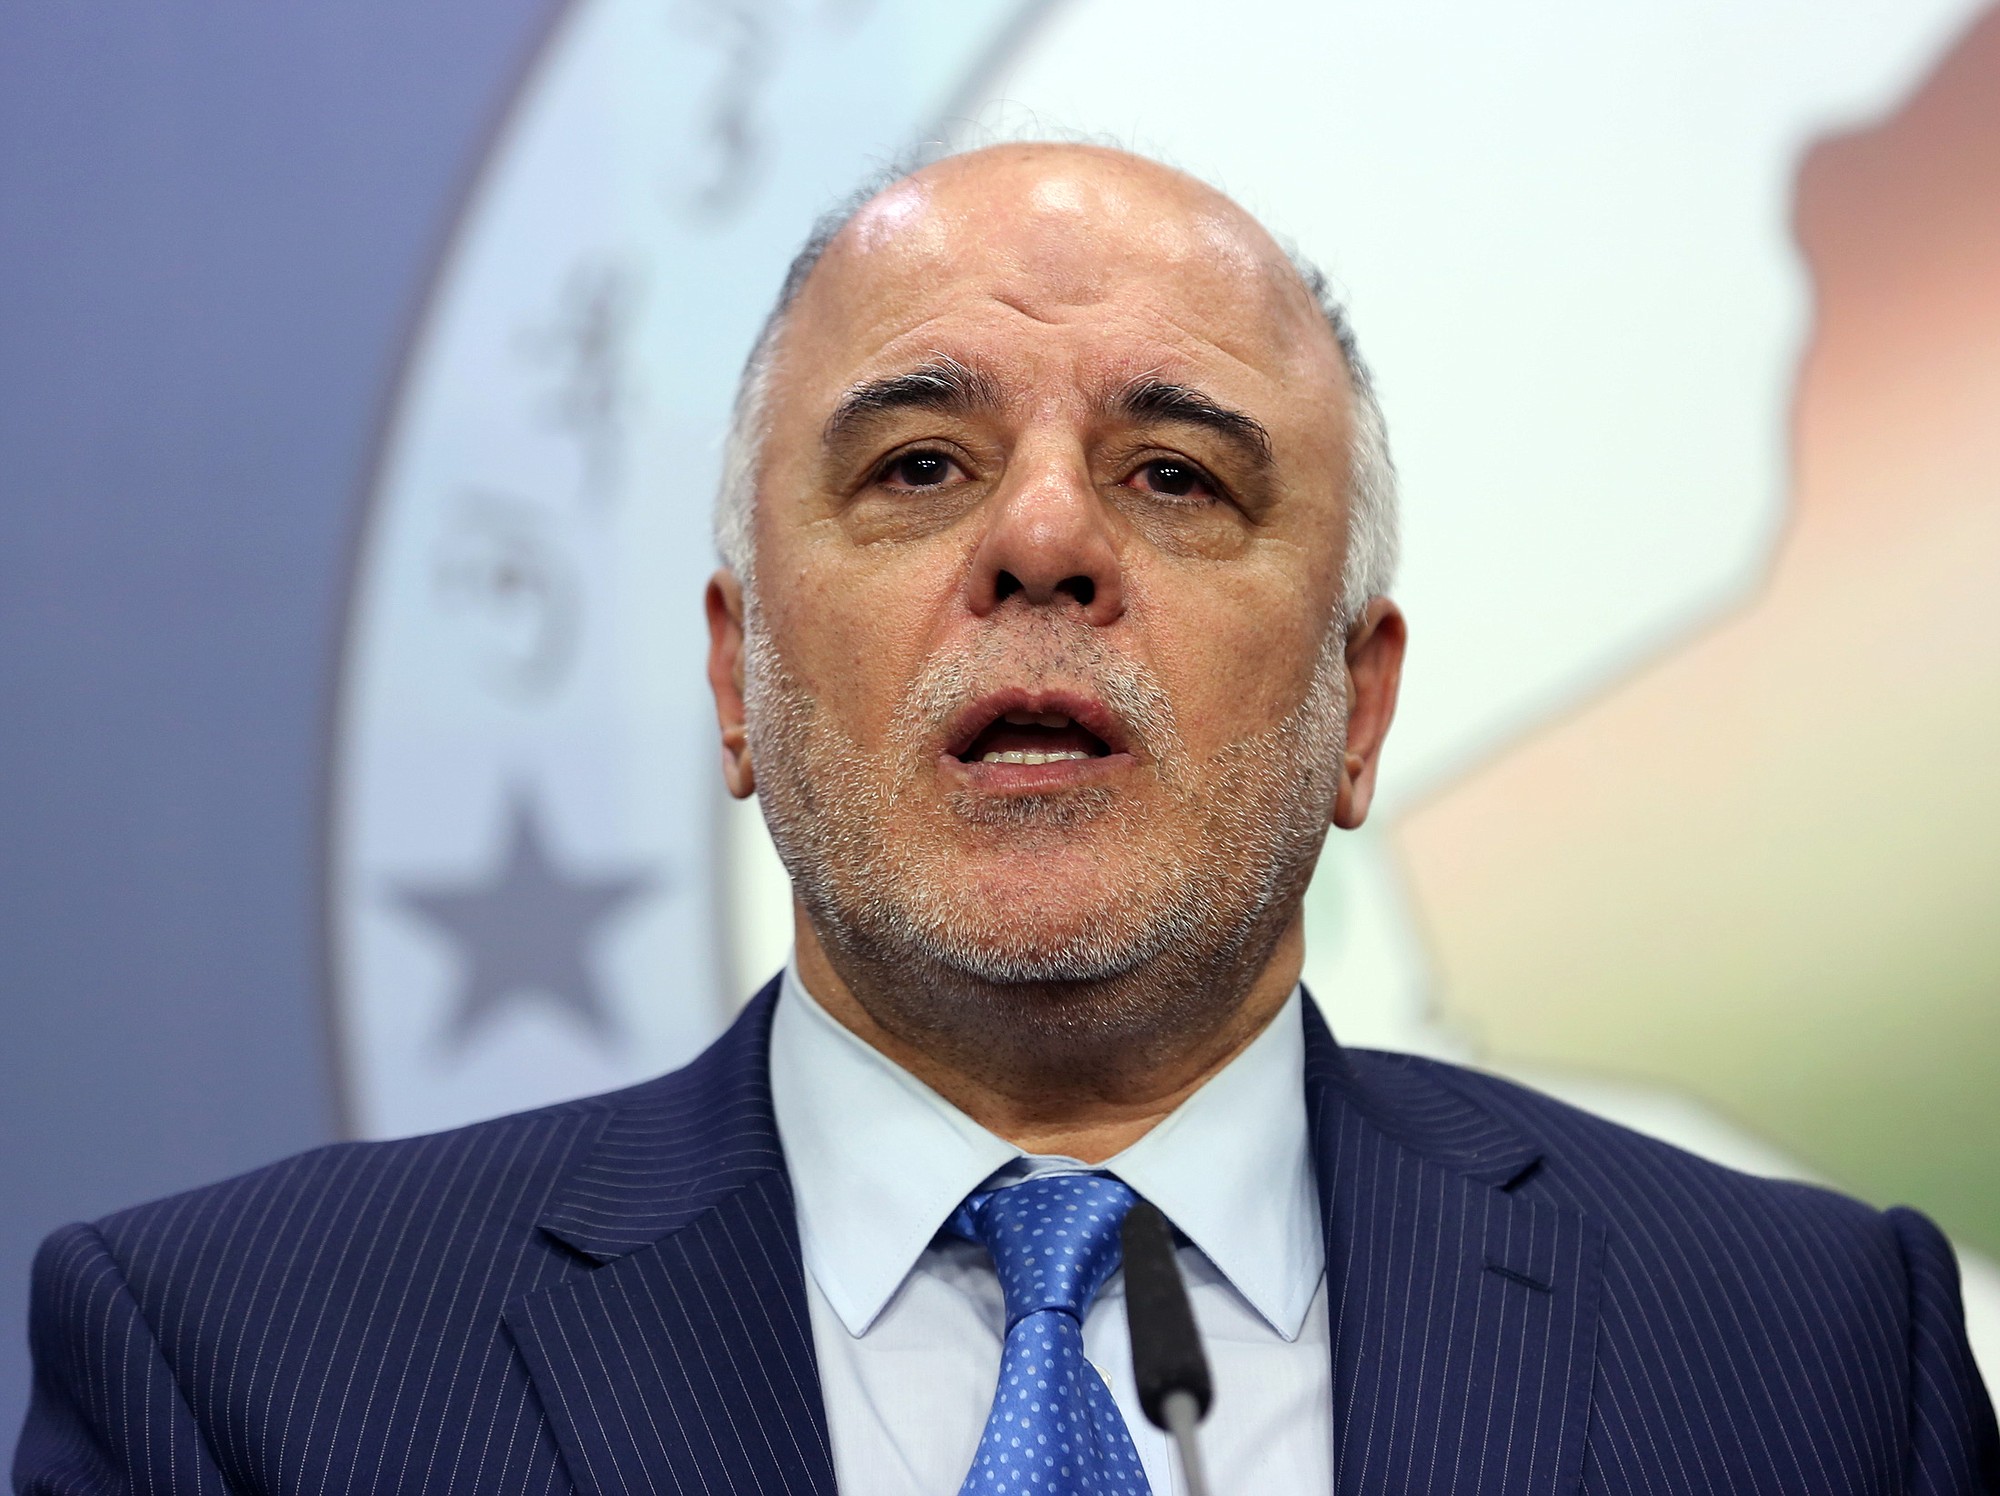 Haider al-Ibadi
New prime minister of Iraq